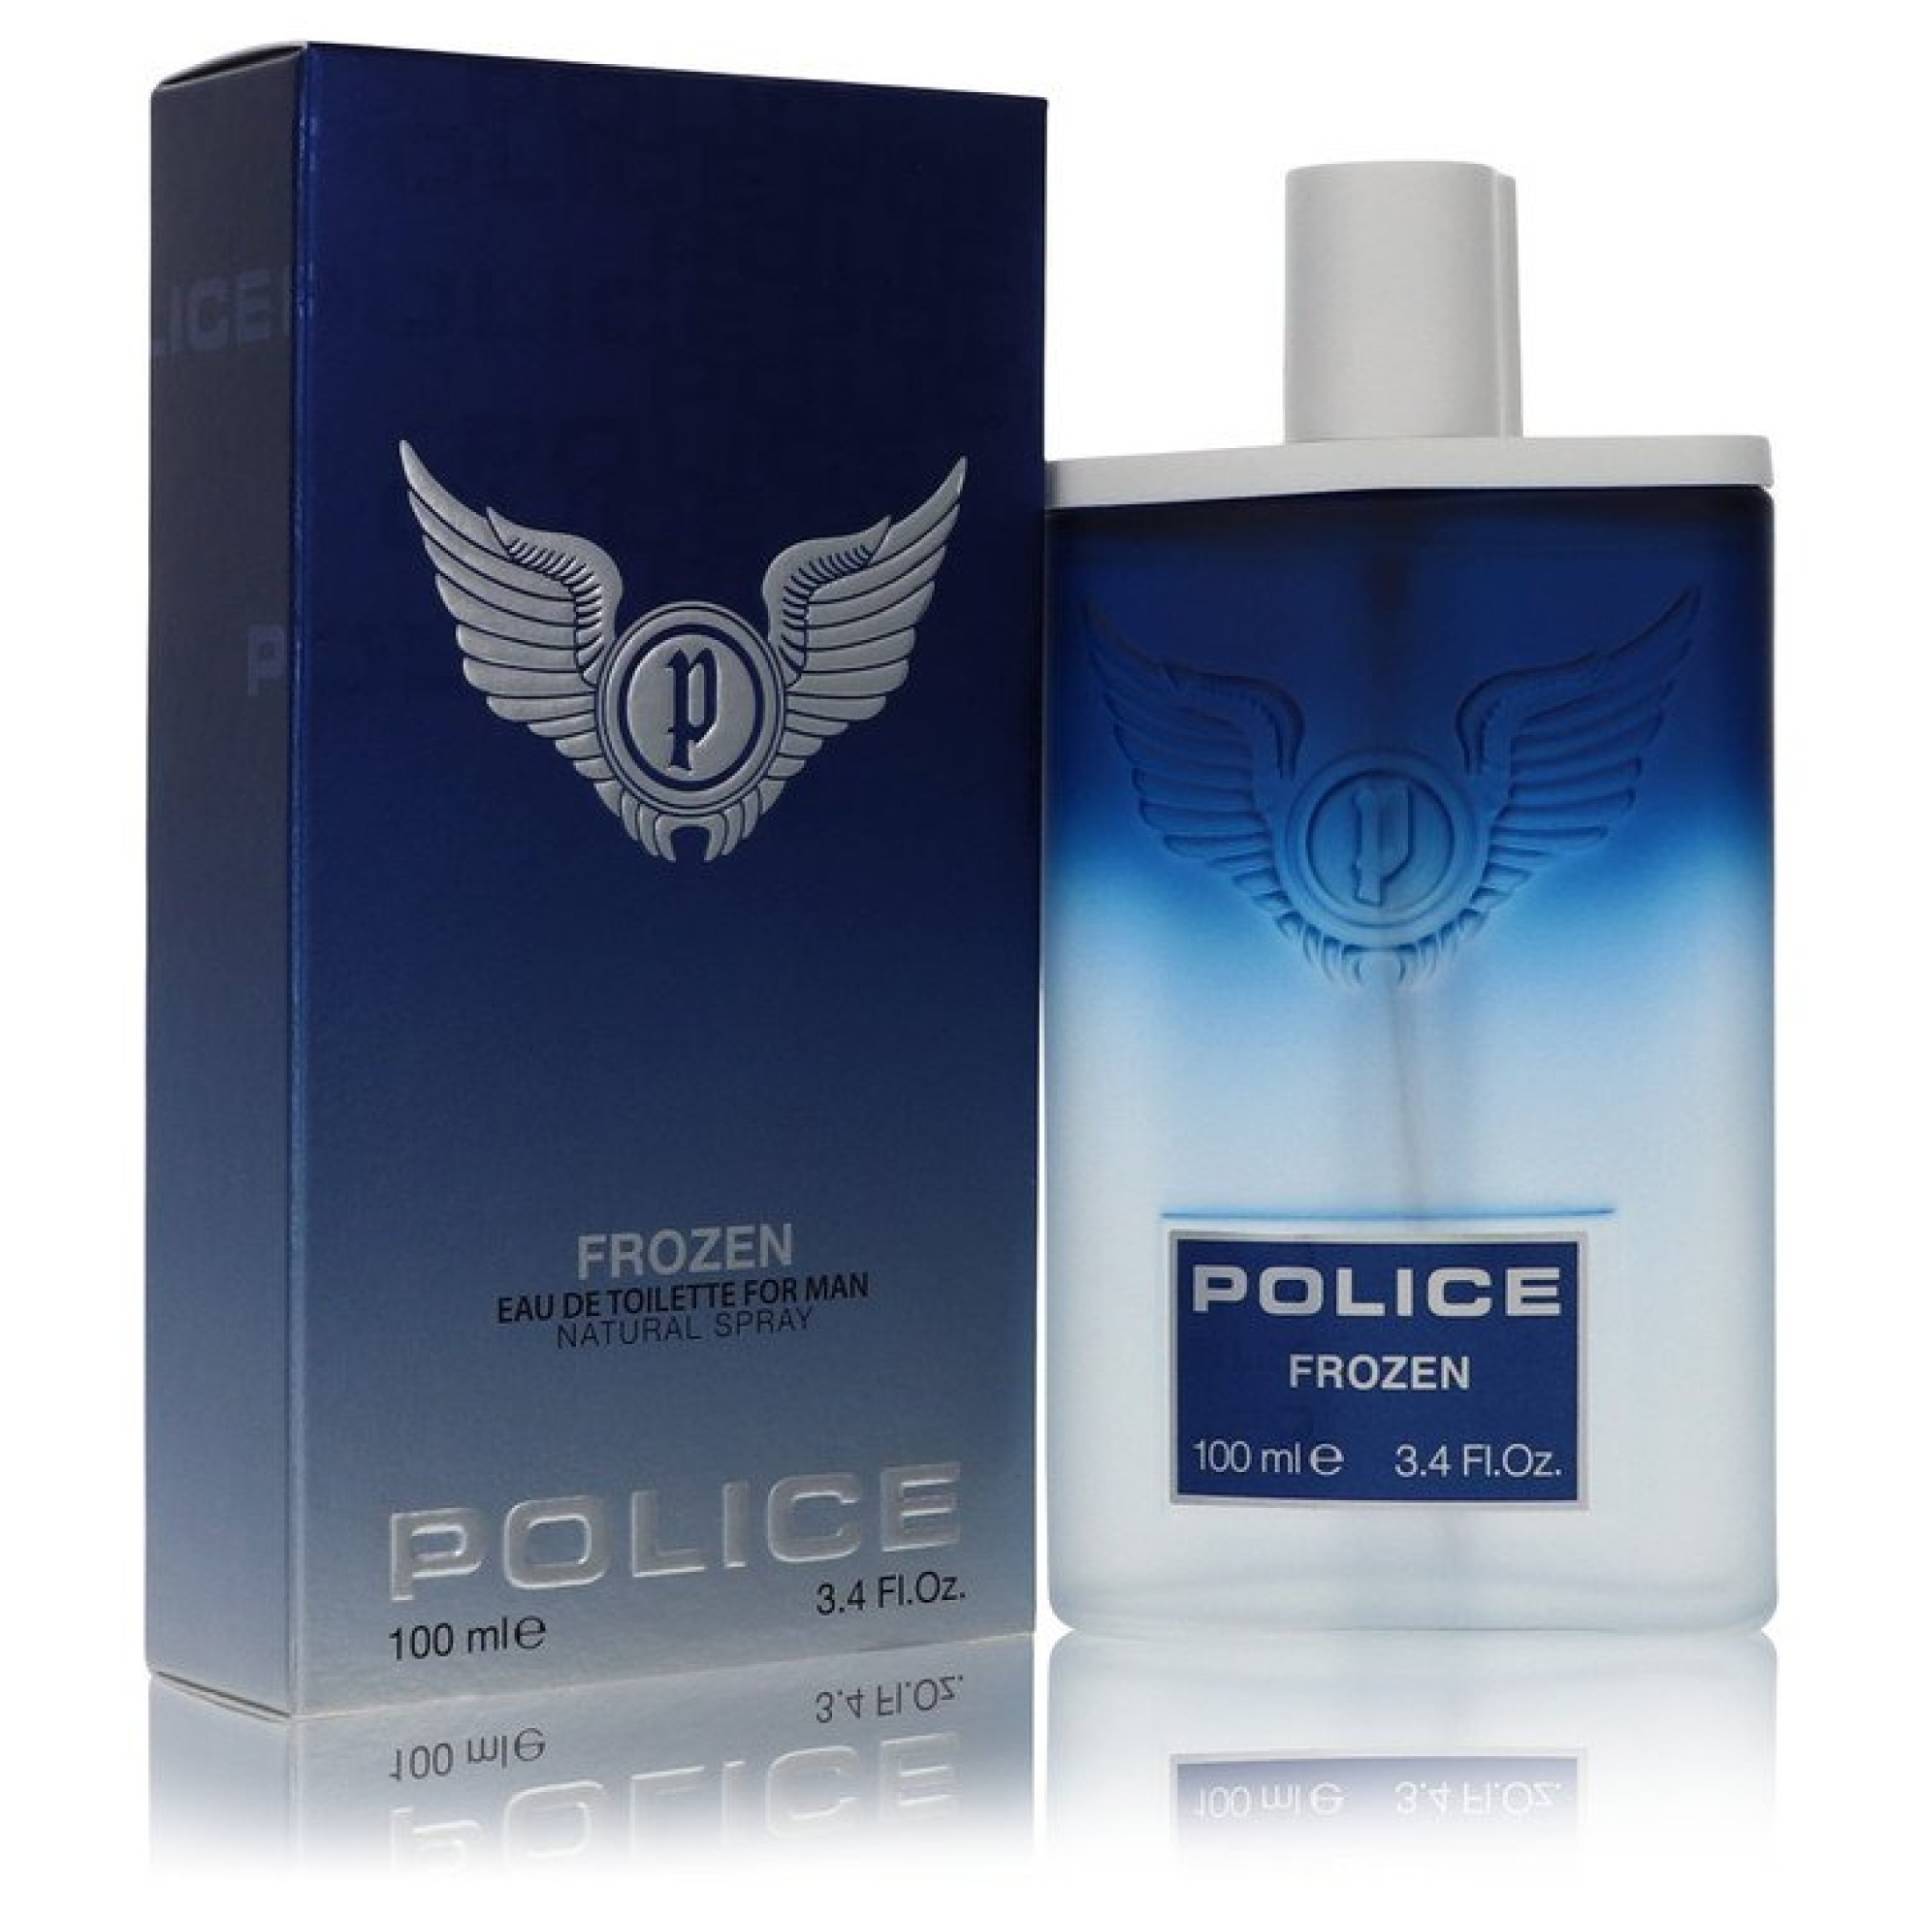 Police Colognes Police Frozen Eau De Toilette Spray 100 ml von Police Colognes